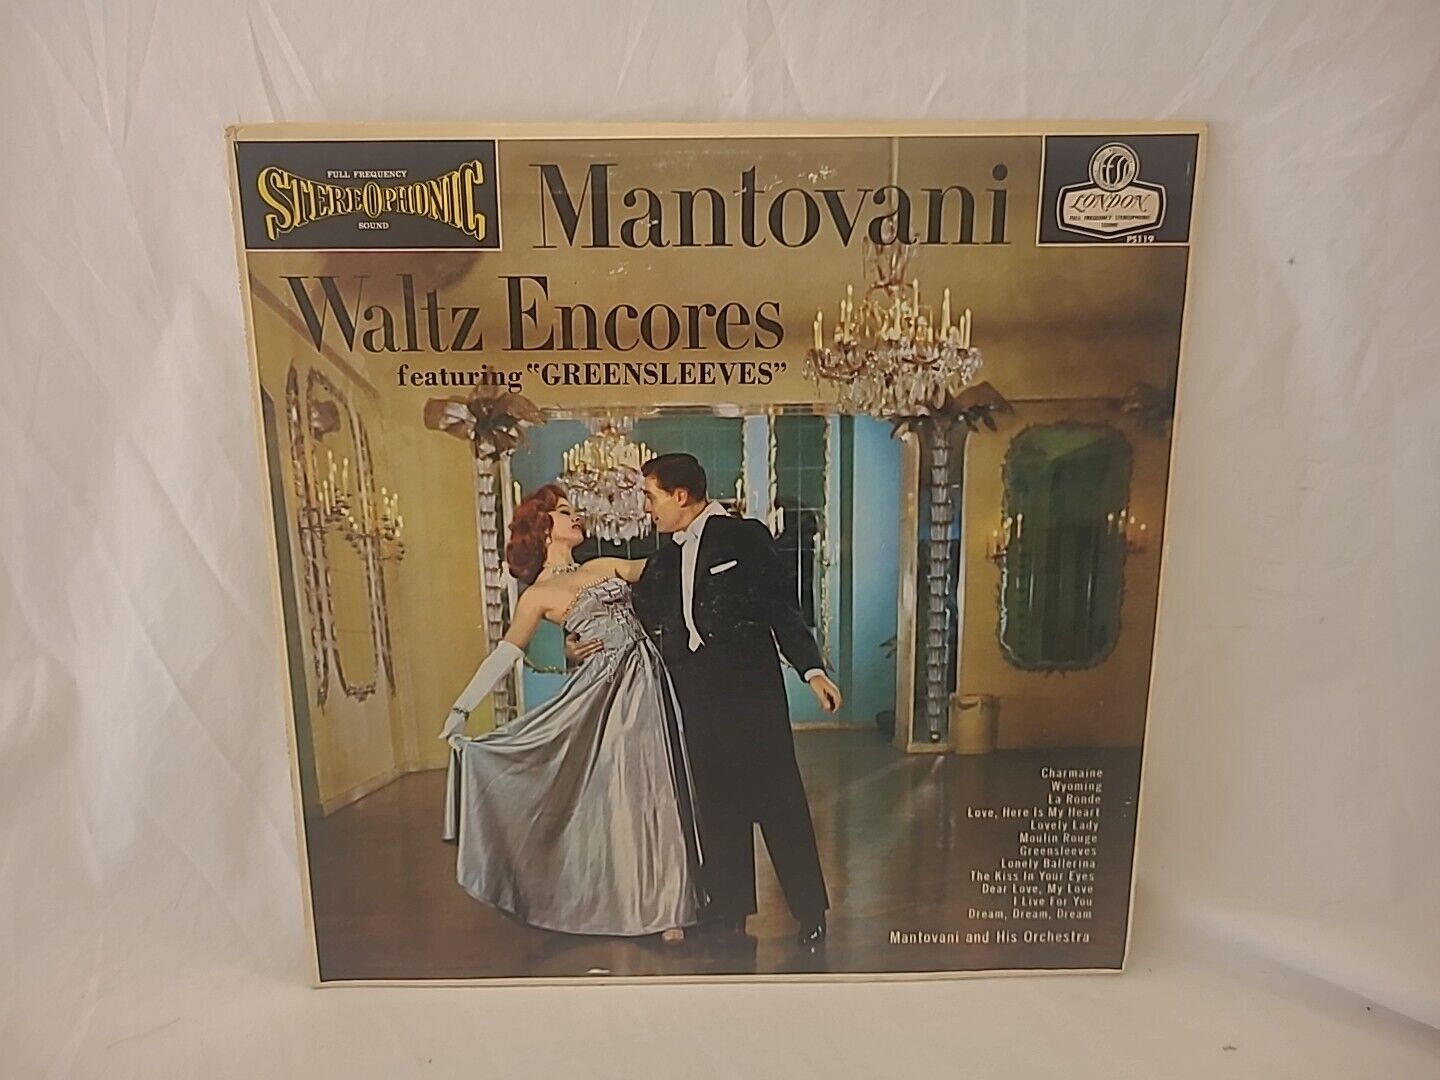 Mantovani WALTZ ENCORES Full Frequency Stereophonic Sound Vinyl LP Album PS119